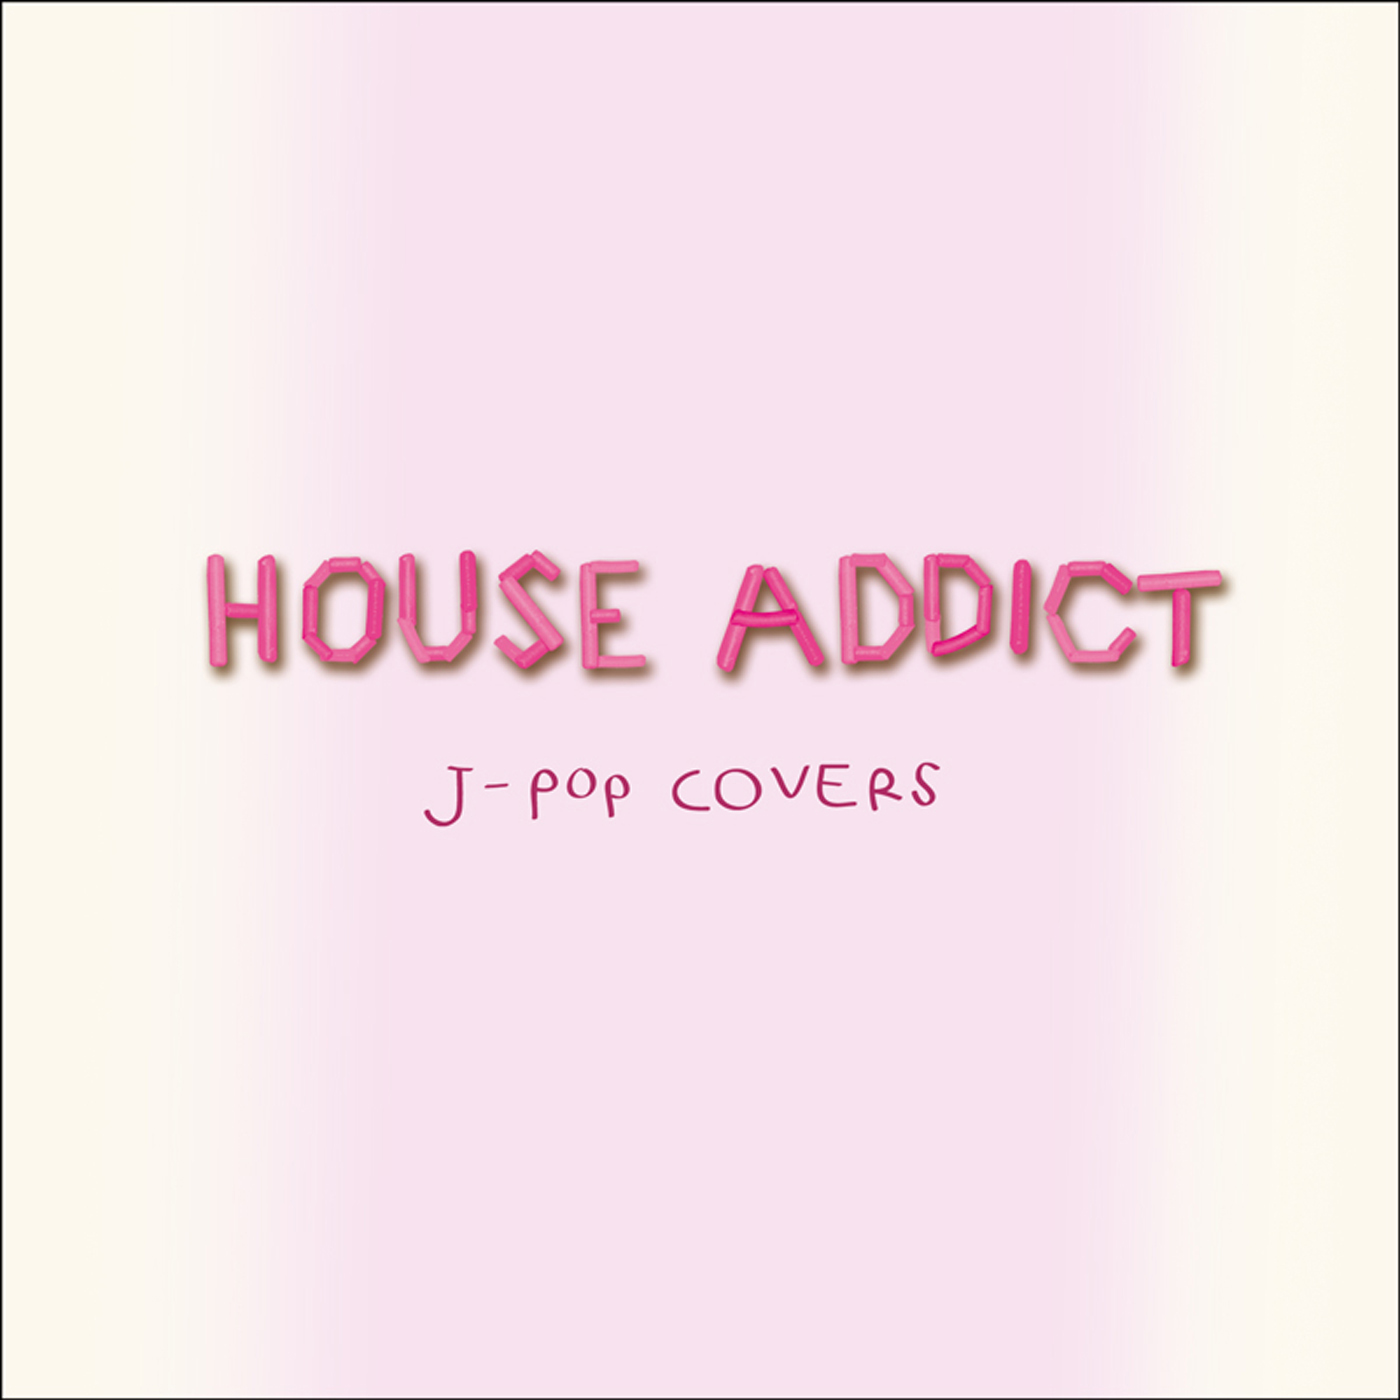 HOUSE ADDICT JPOP COVERS